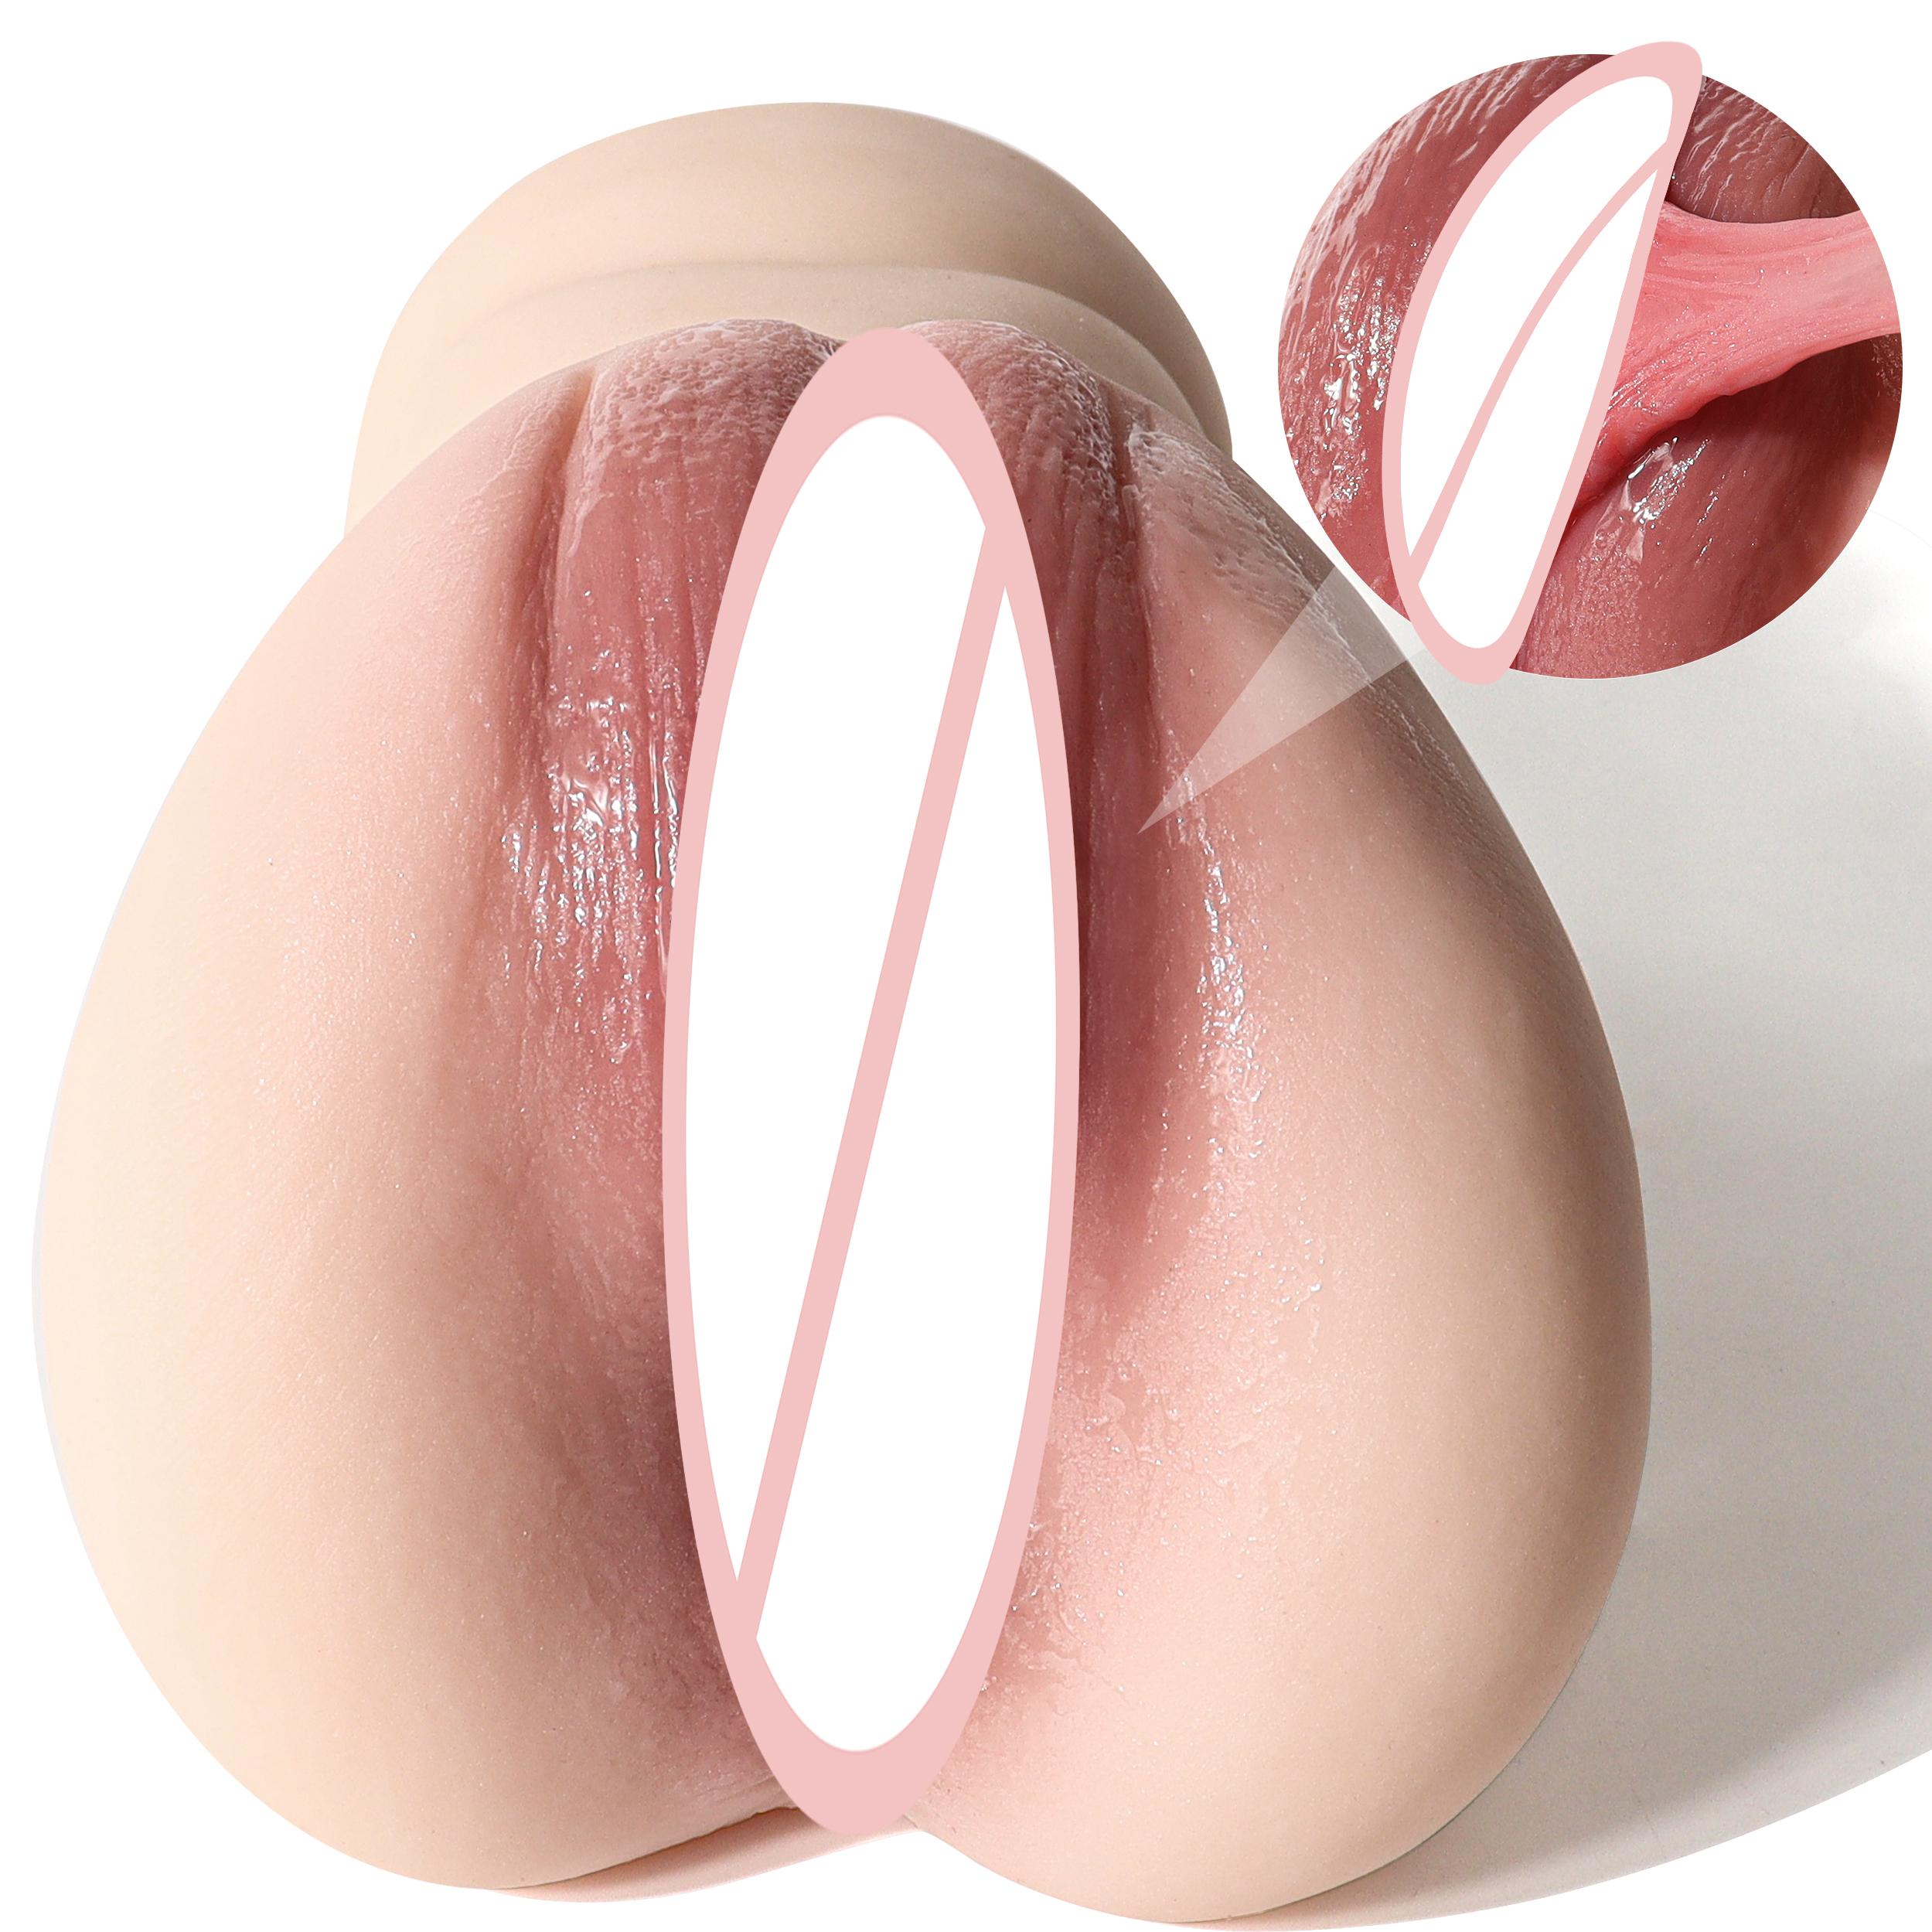 Realistic Adult Male Masturbation Artificial Vagina Fleshlight Sex Toy Fuckingmachine For Men